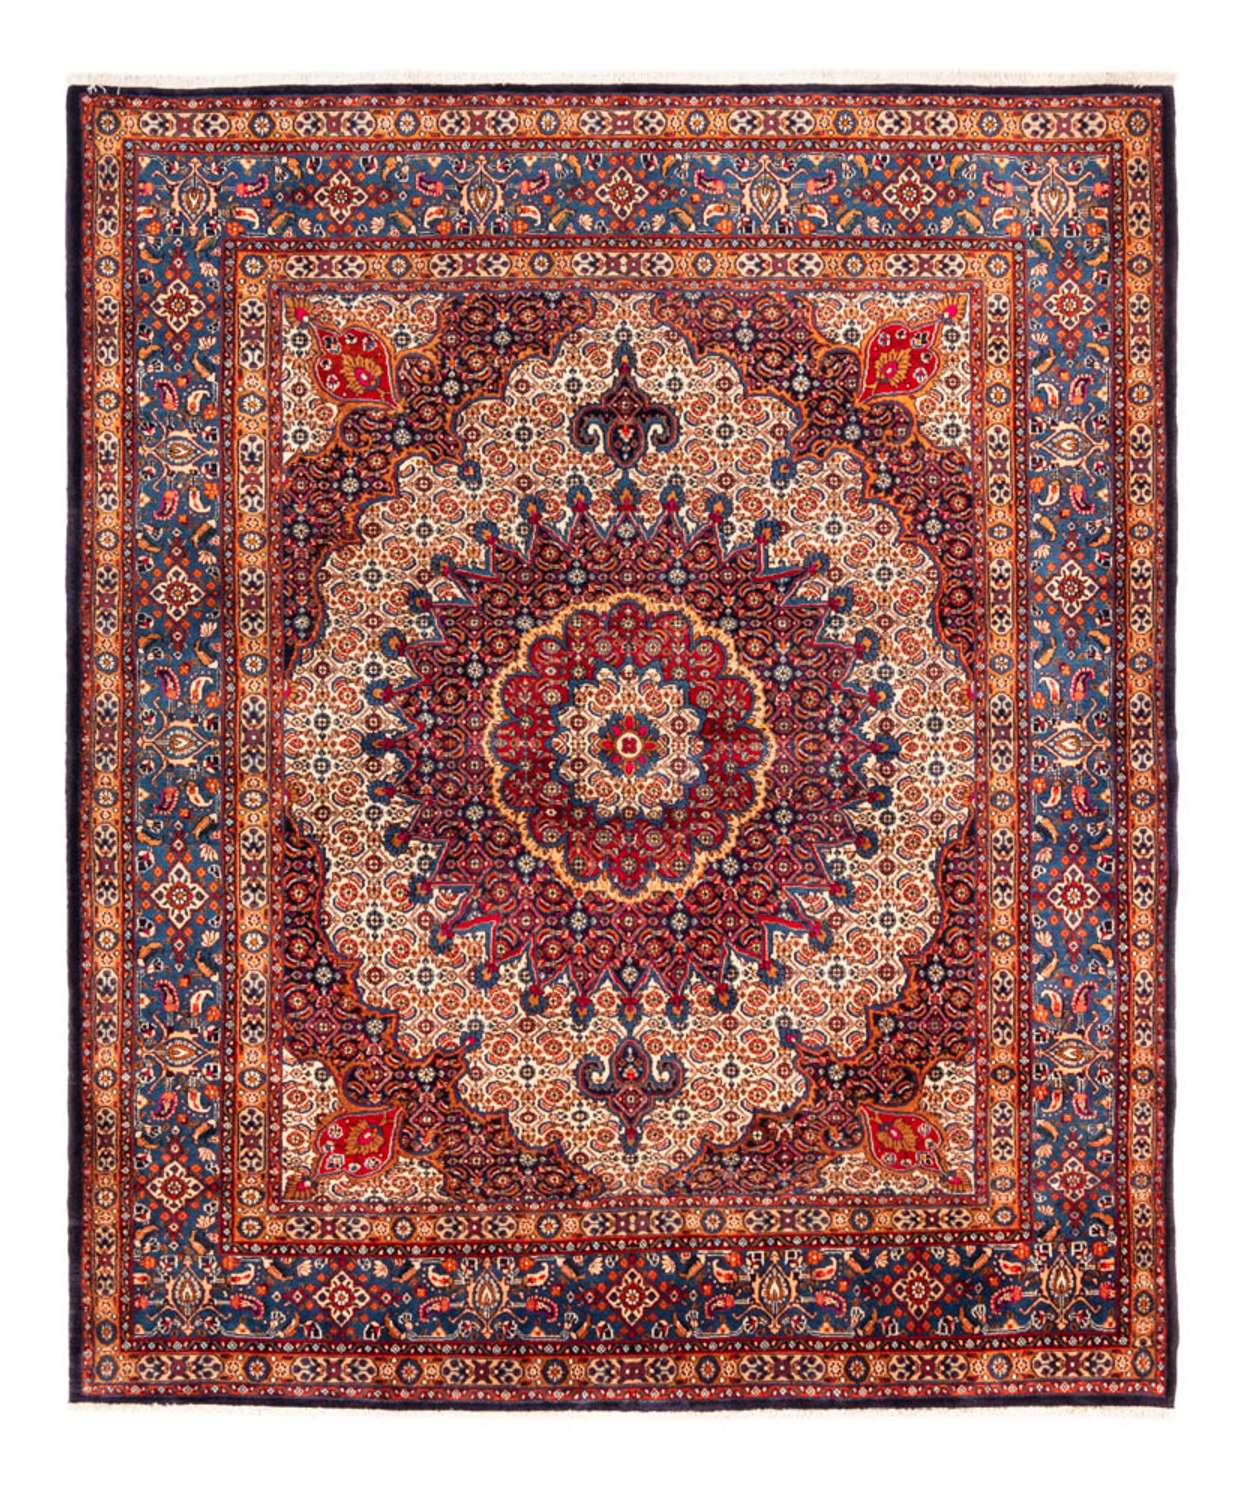 Tapis persan - Classique - 262 x 217 cm - rouge